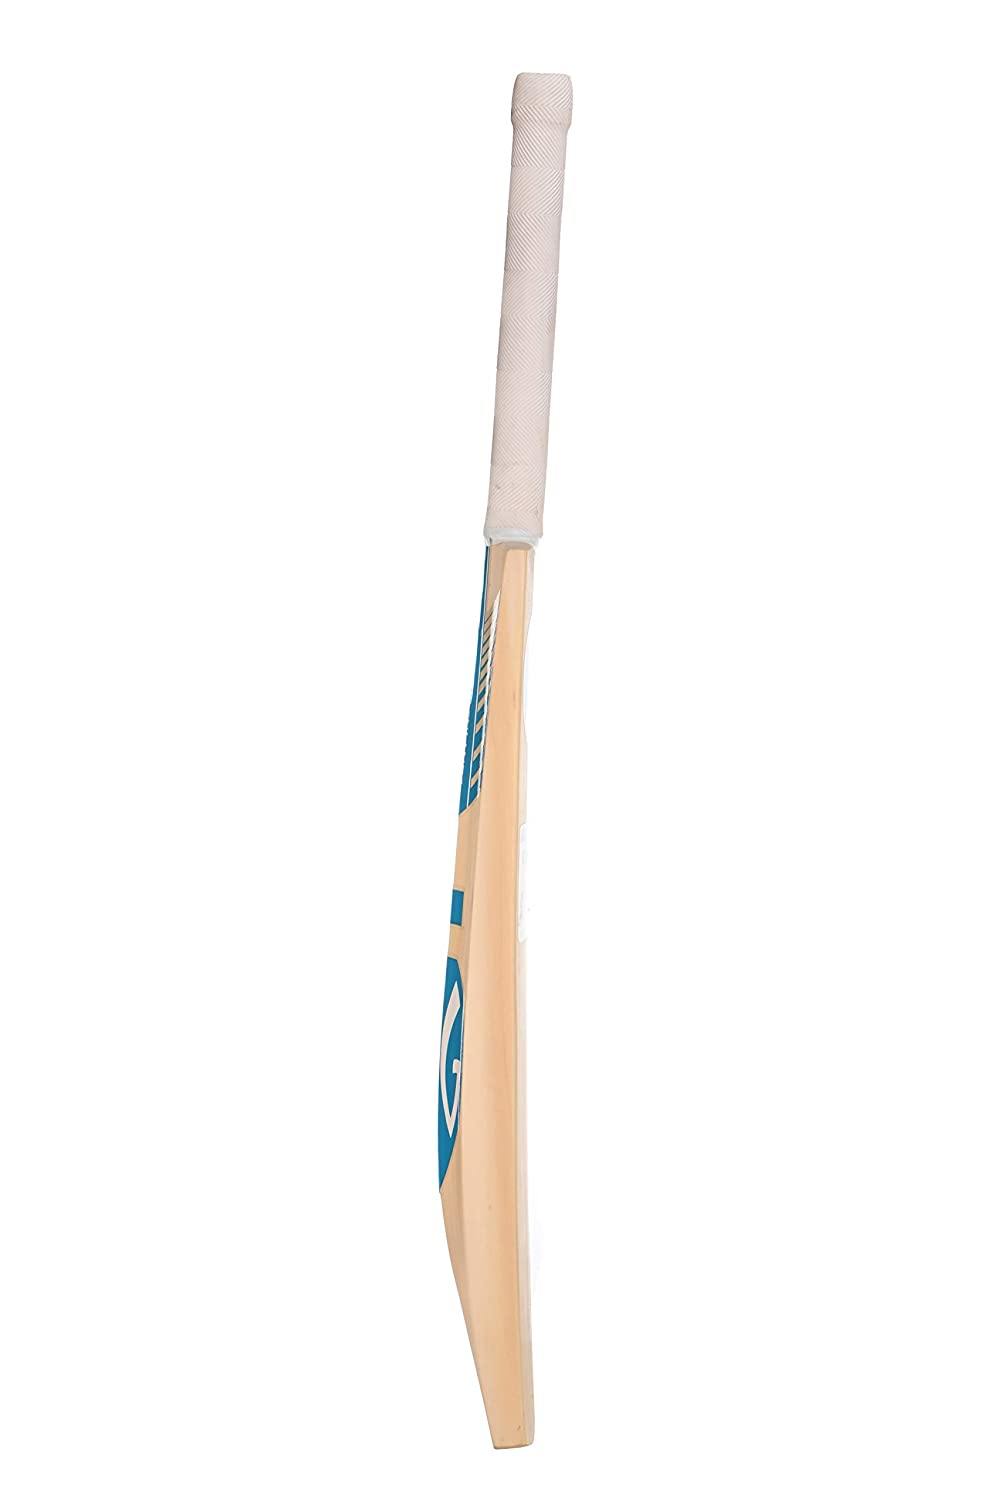 SG Cricket Bat Boundary Classic - Best Price online Prokicksports.com